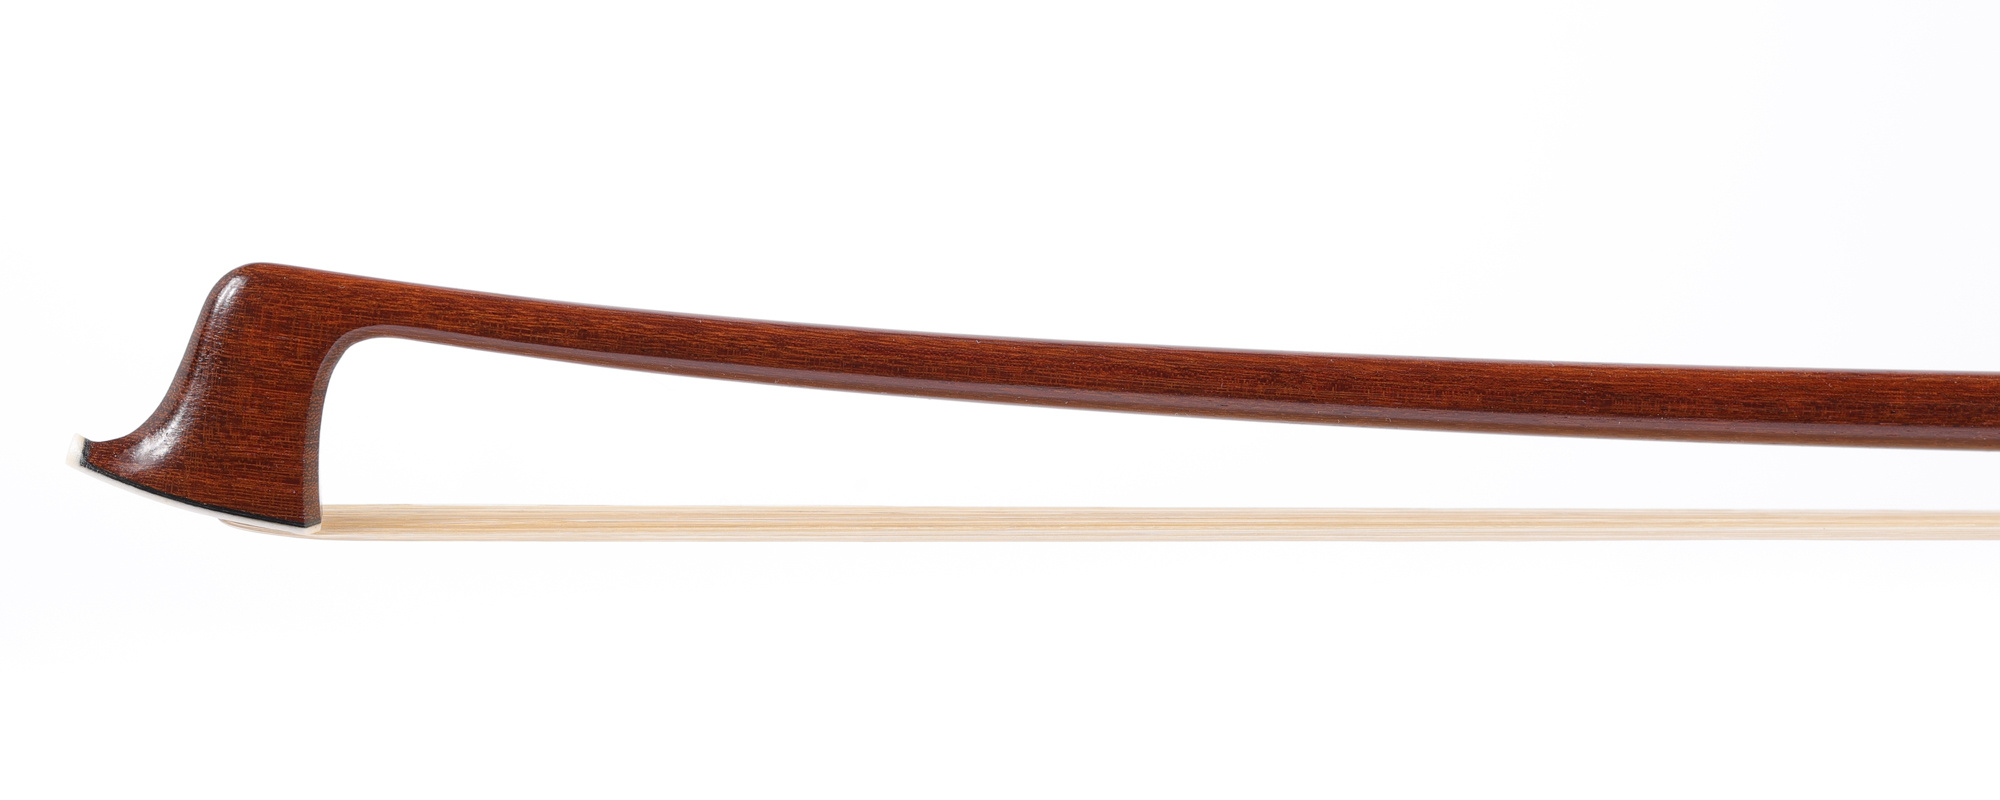 Arcos Brasil F. MODENESE round violin bow, Ipe, nickel-mounted, BRAZIL